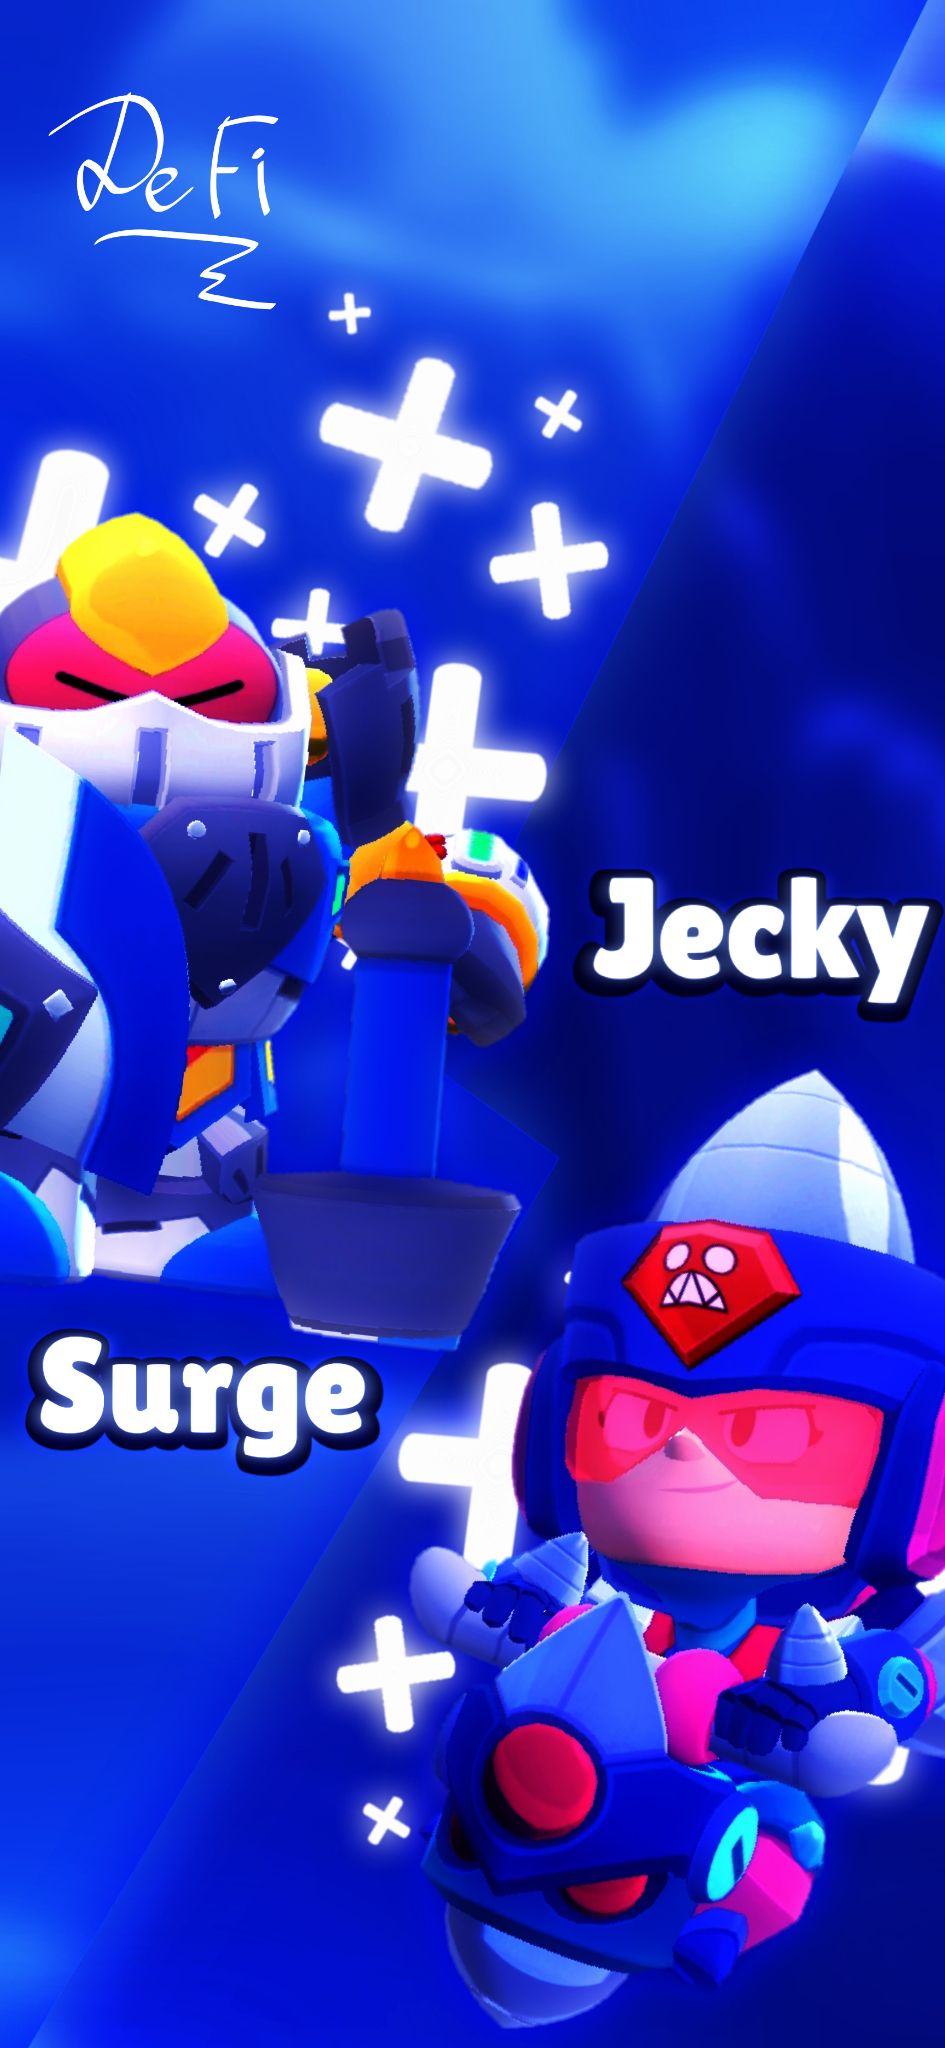 Surge VS Jecky Wallpaper (by DeFi)